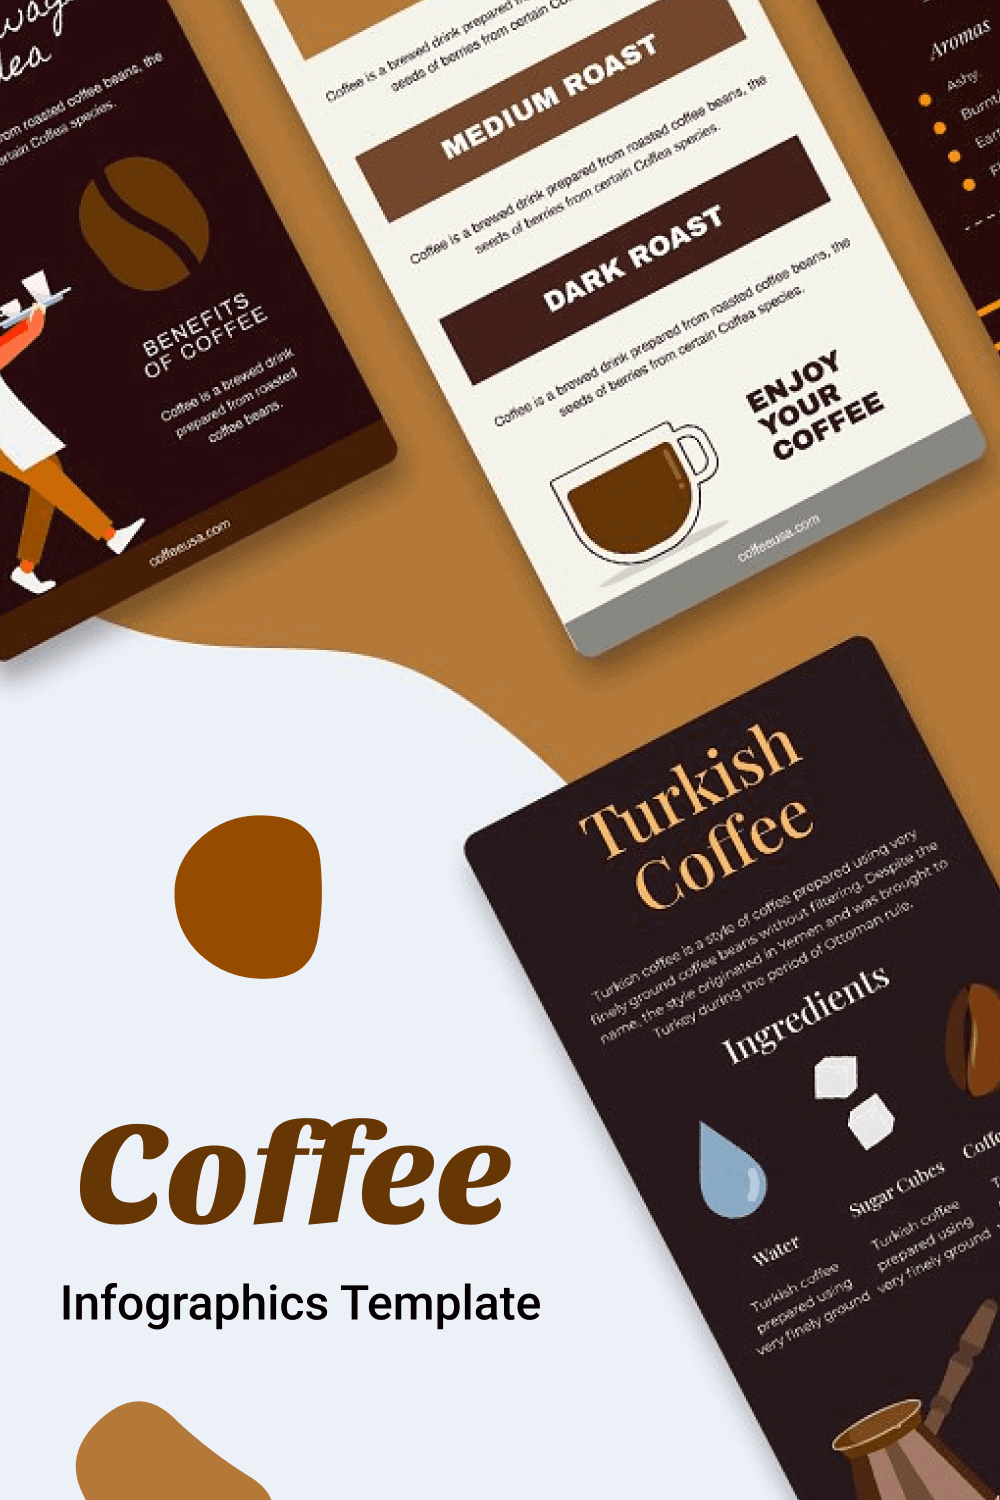 Benefits of Coffee, Medium Roast and Dark Roast.